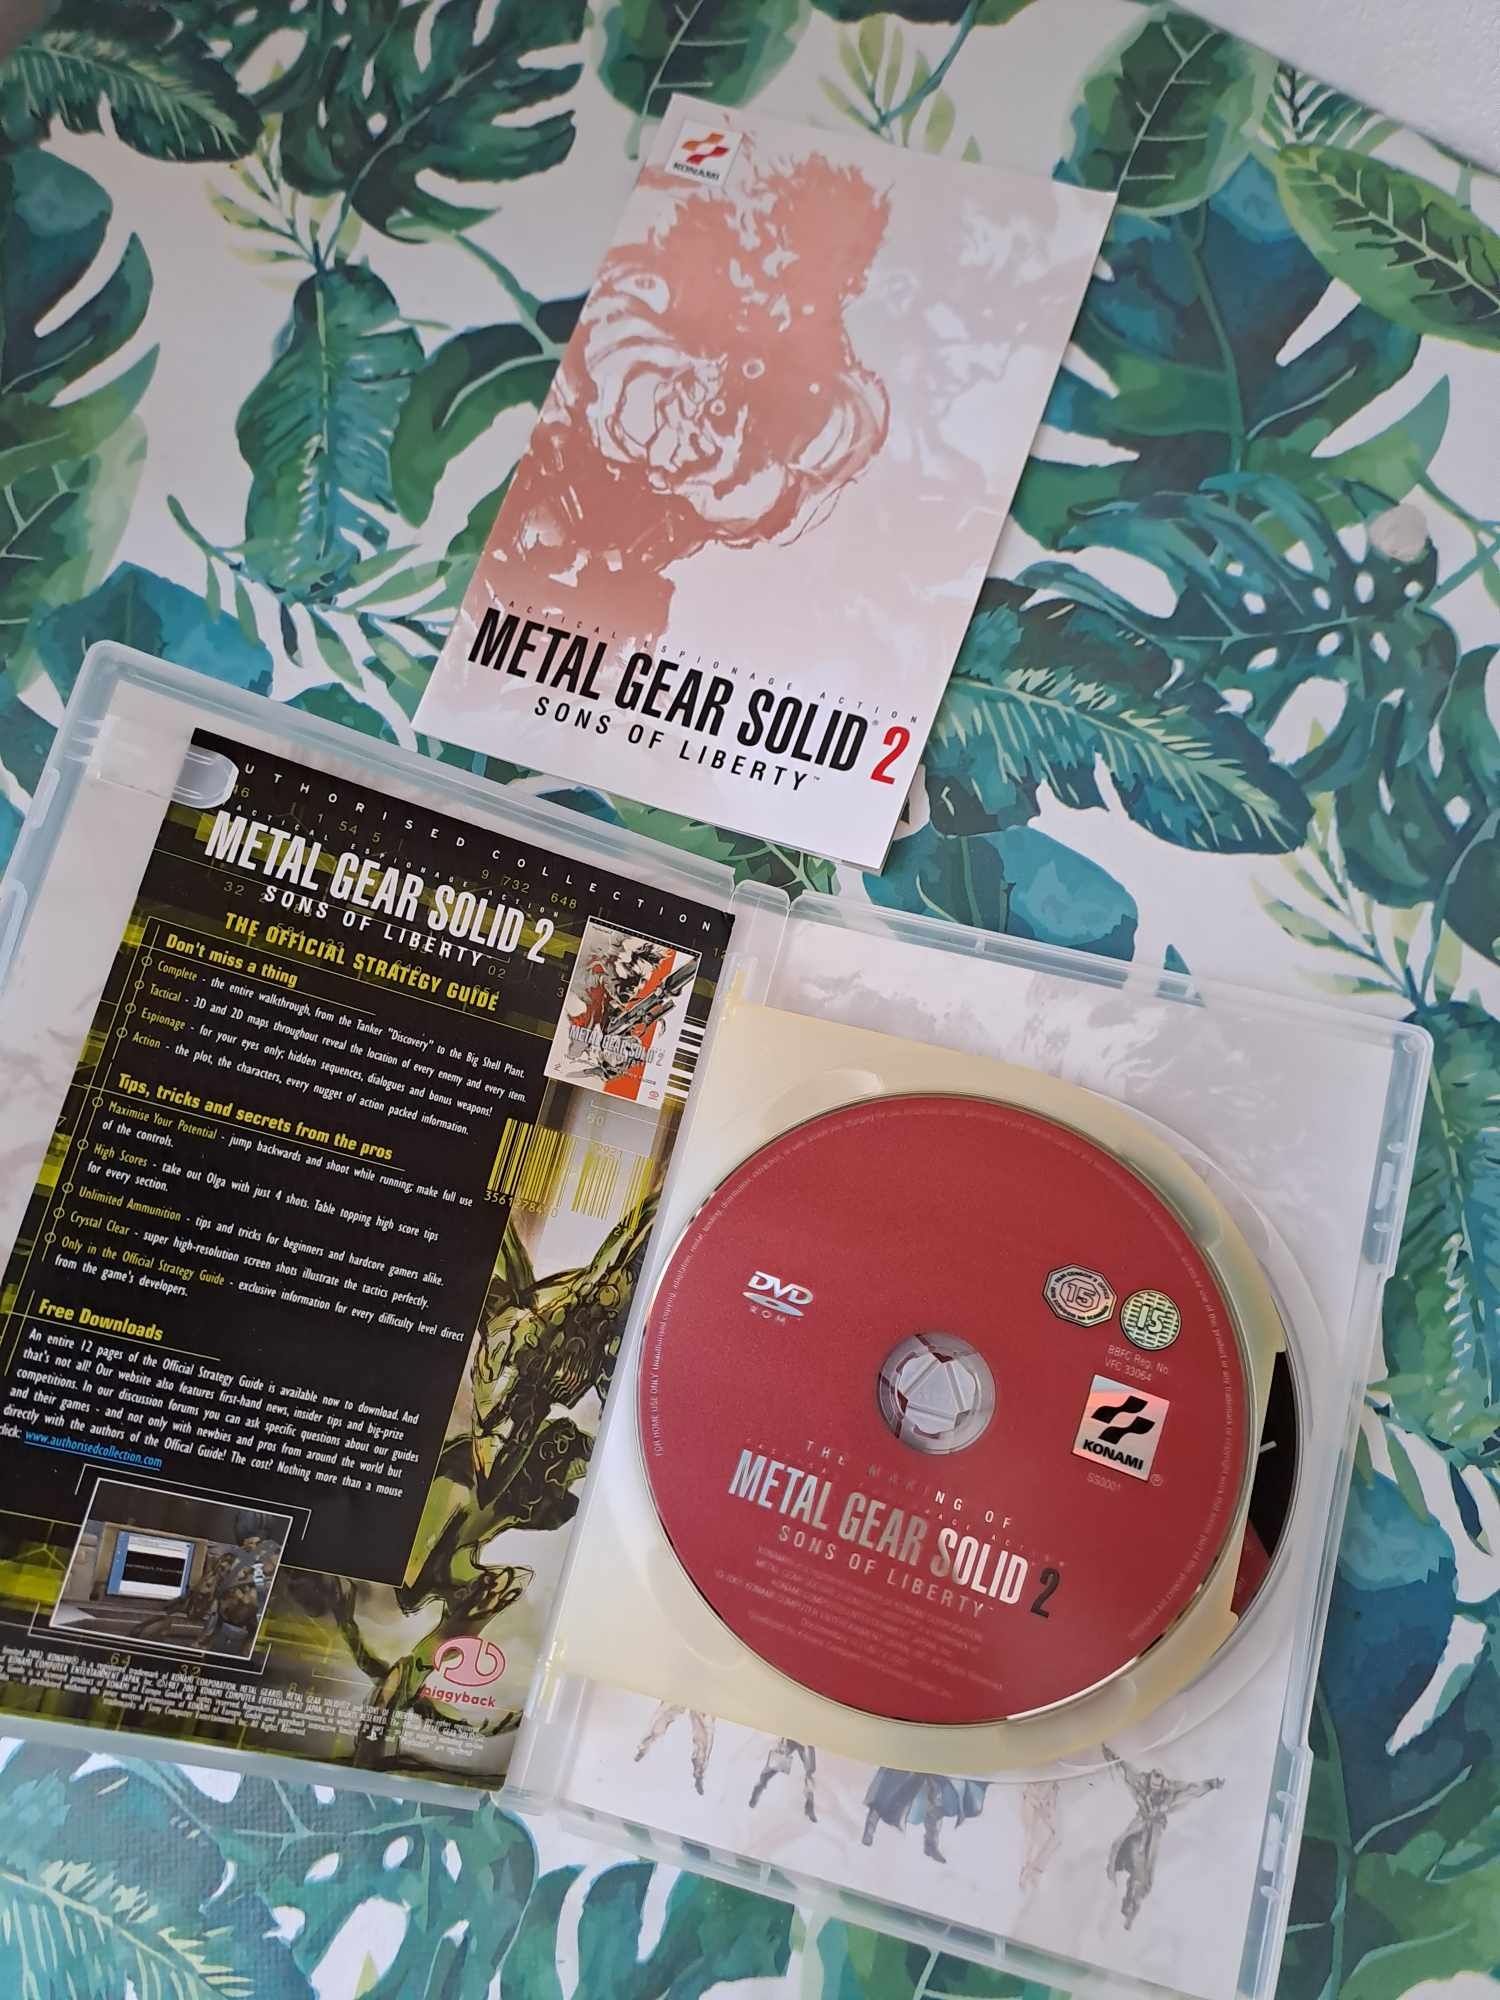 Metal Gear Solid 2 PlayStation 2